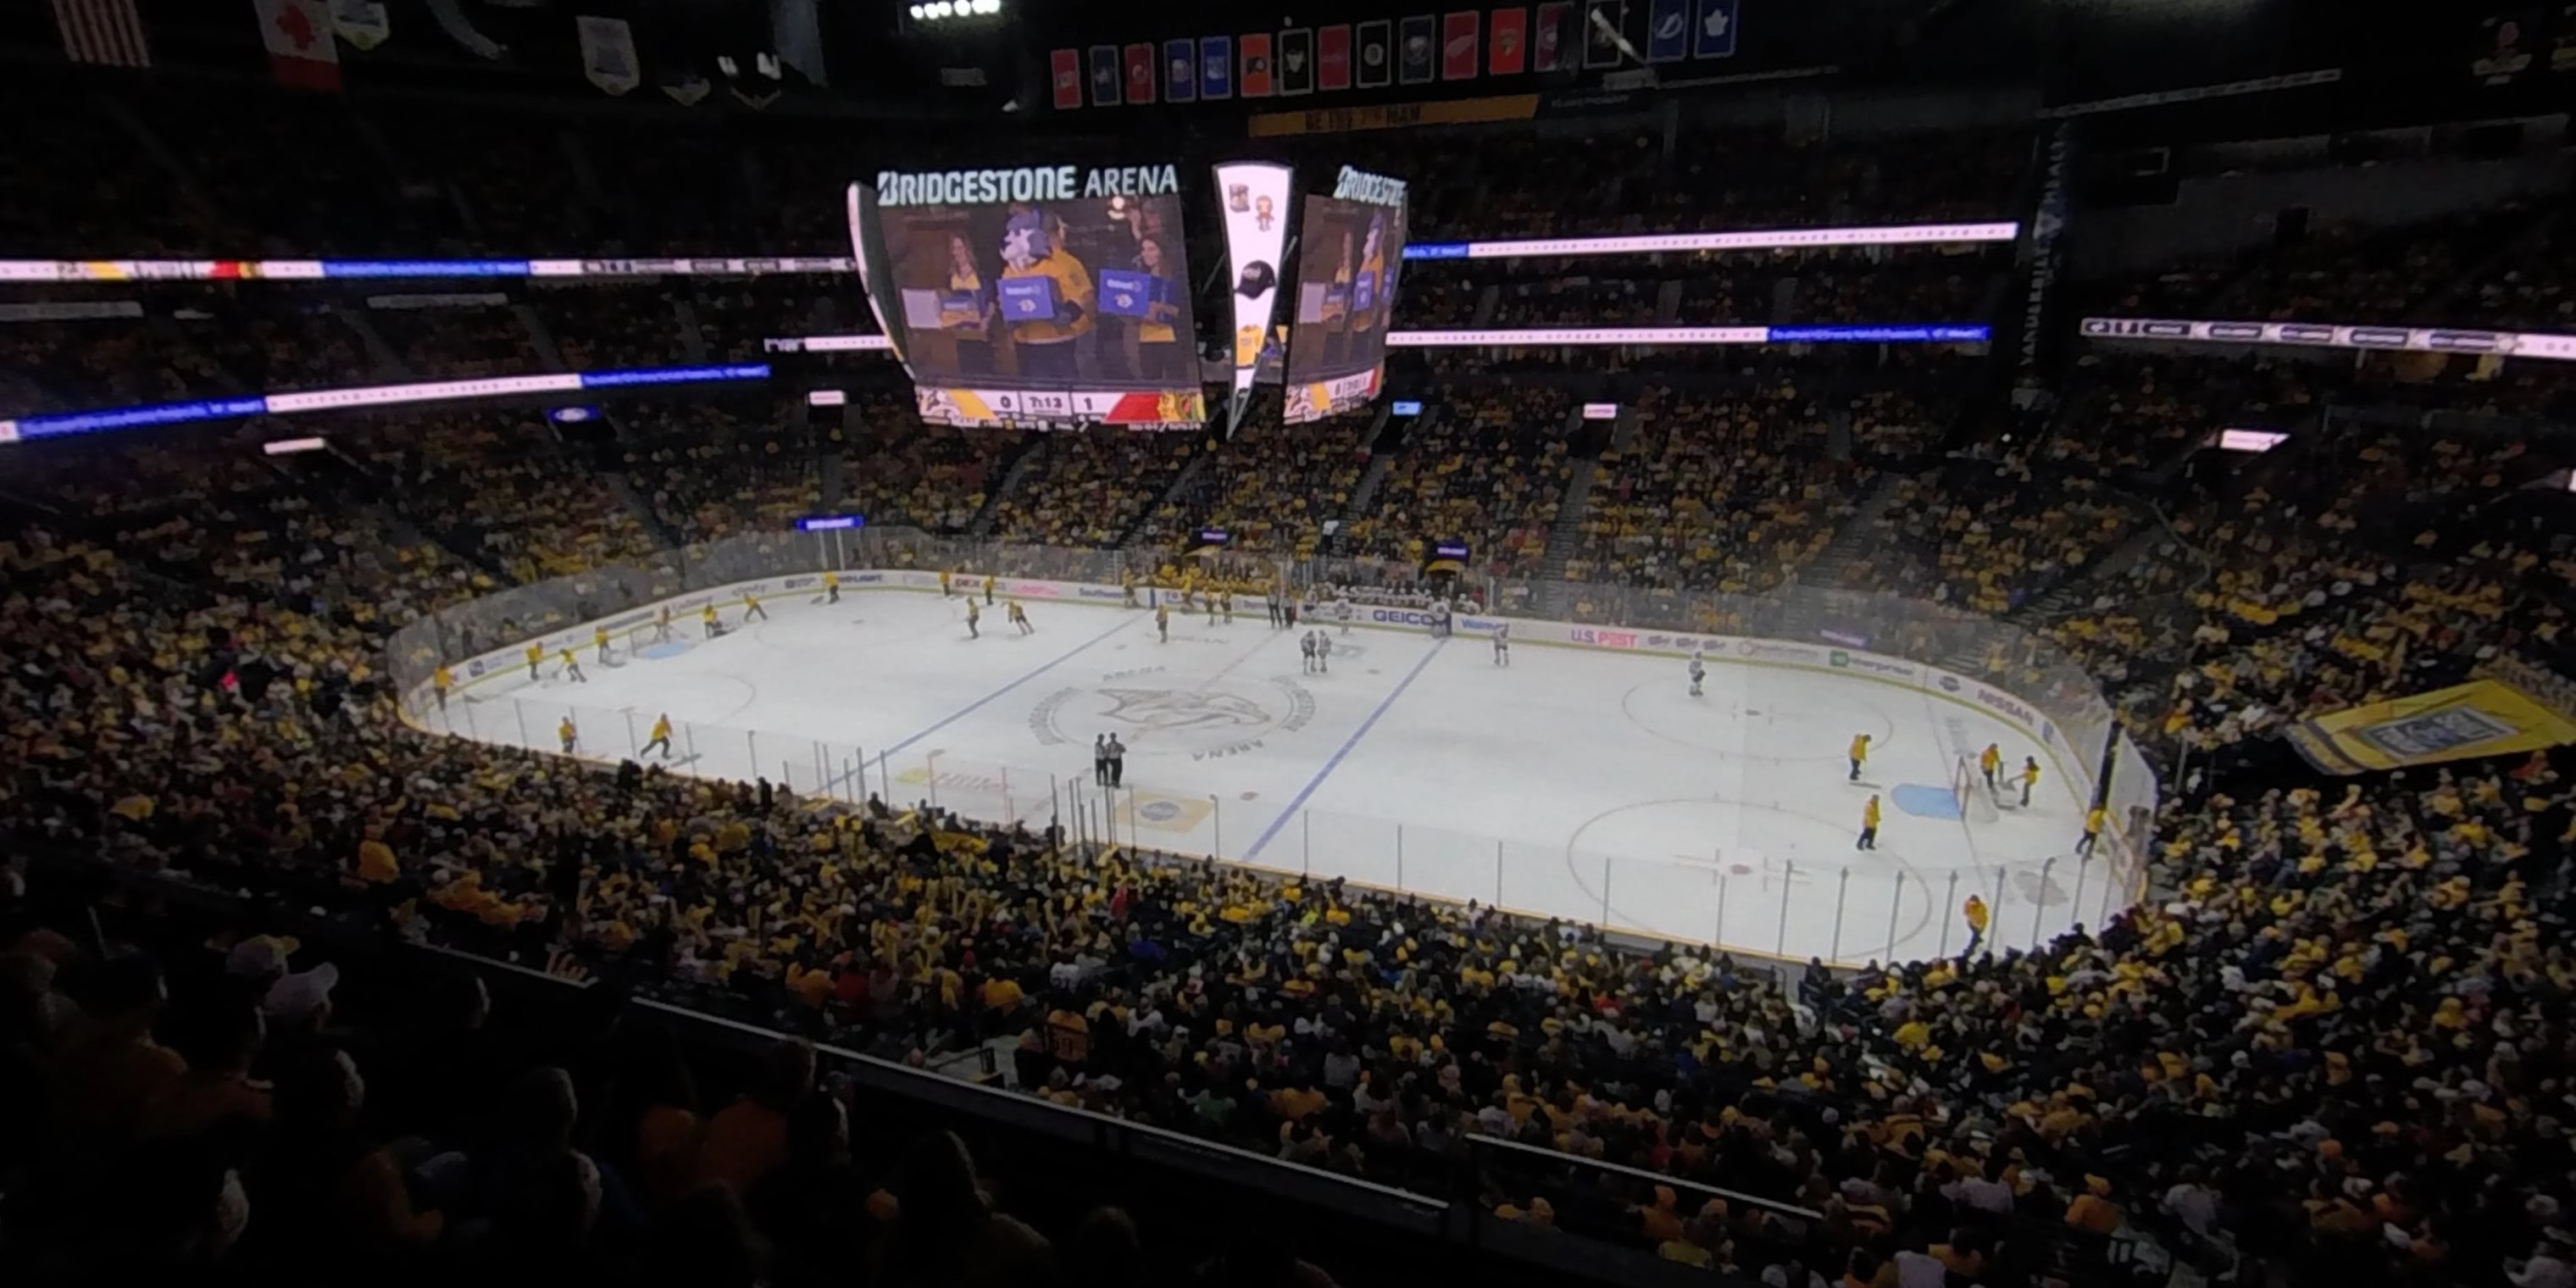 section 211 panoramic seat view  for hockey - bridgestone arena